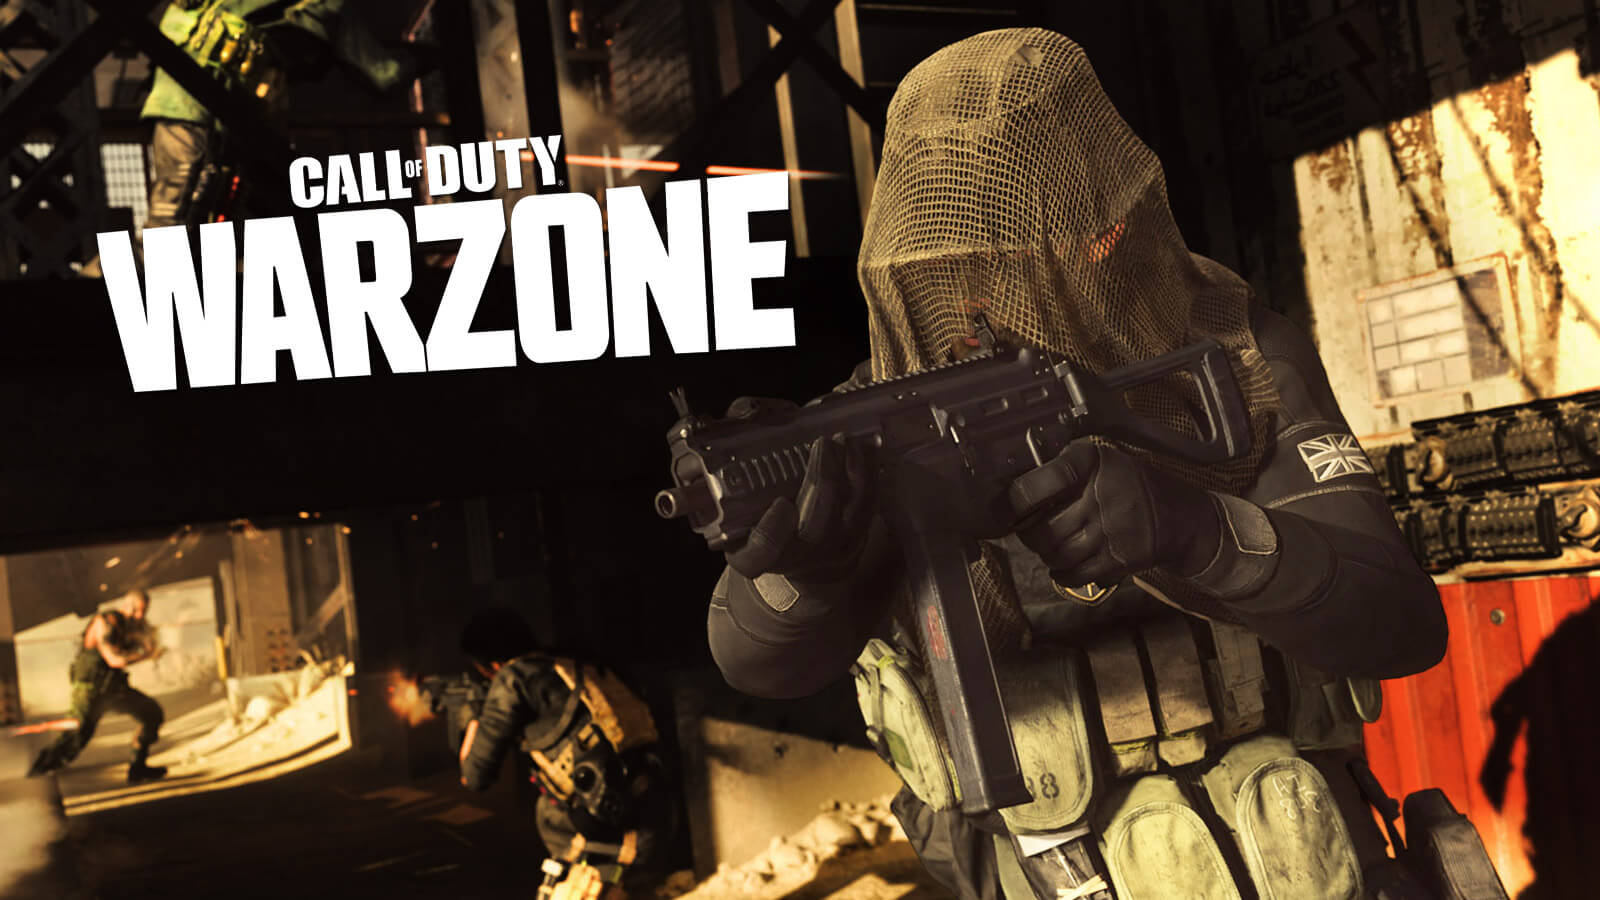 Call of duty warzone графика. Call of Duty Warzone. Call of Duty Warzone 2. Call of Duty Warzone 2 стрим. Варзоне Call of Duty.